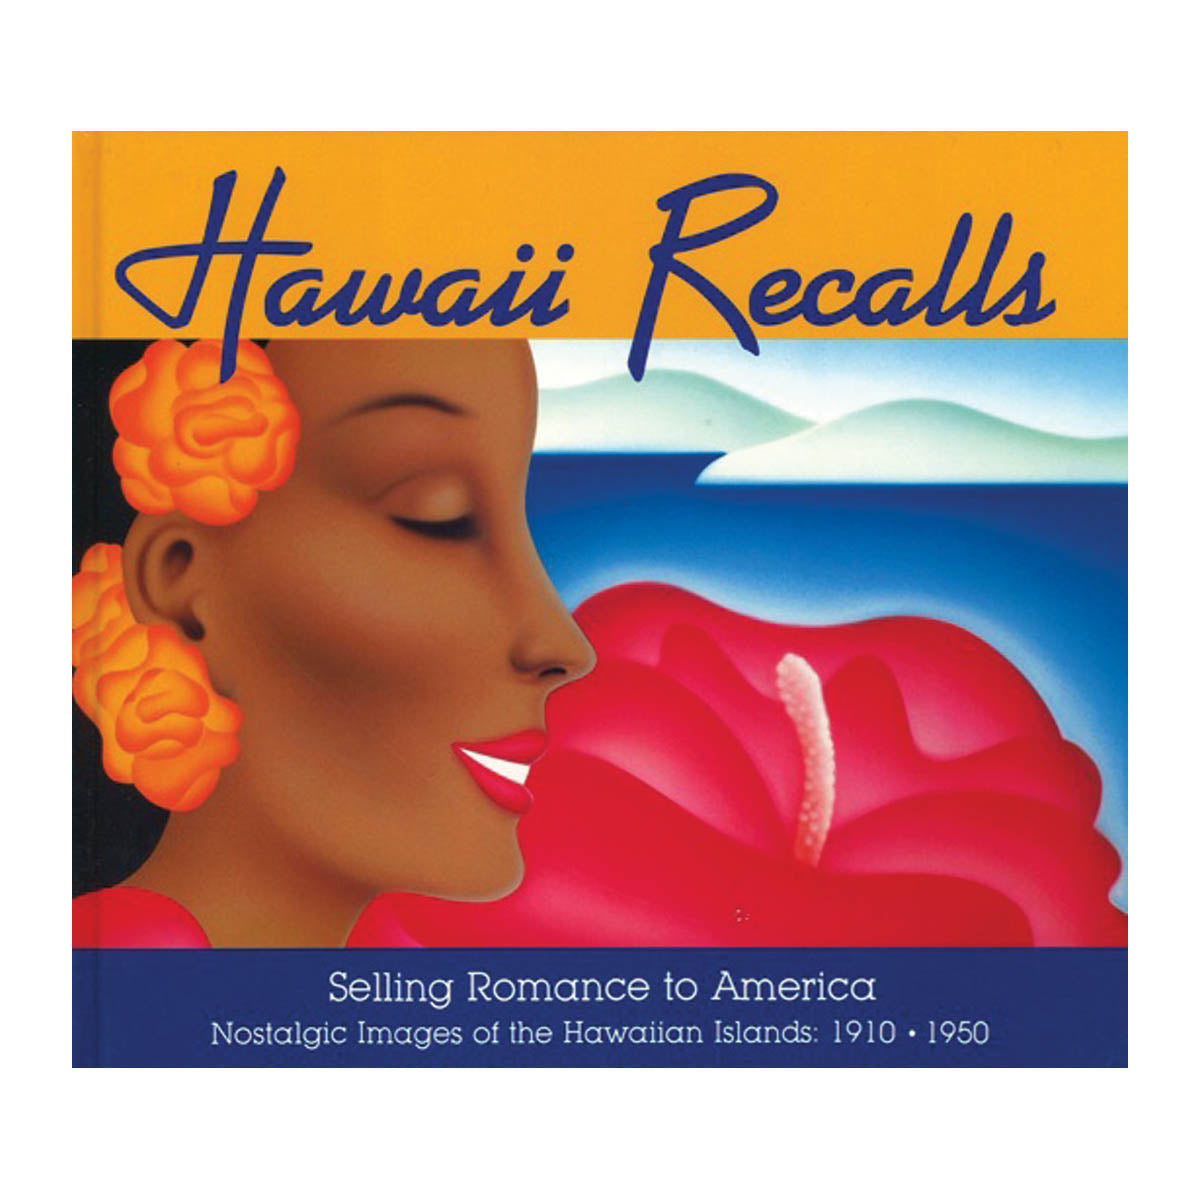 Hawaiʻi Recalls (HC)